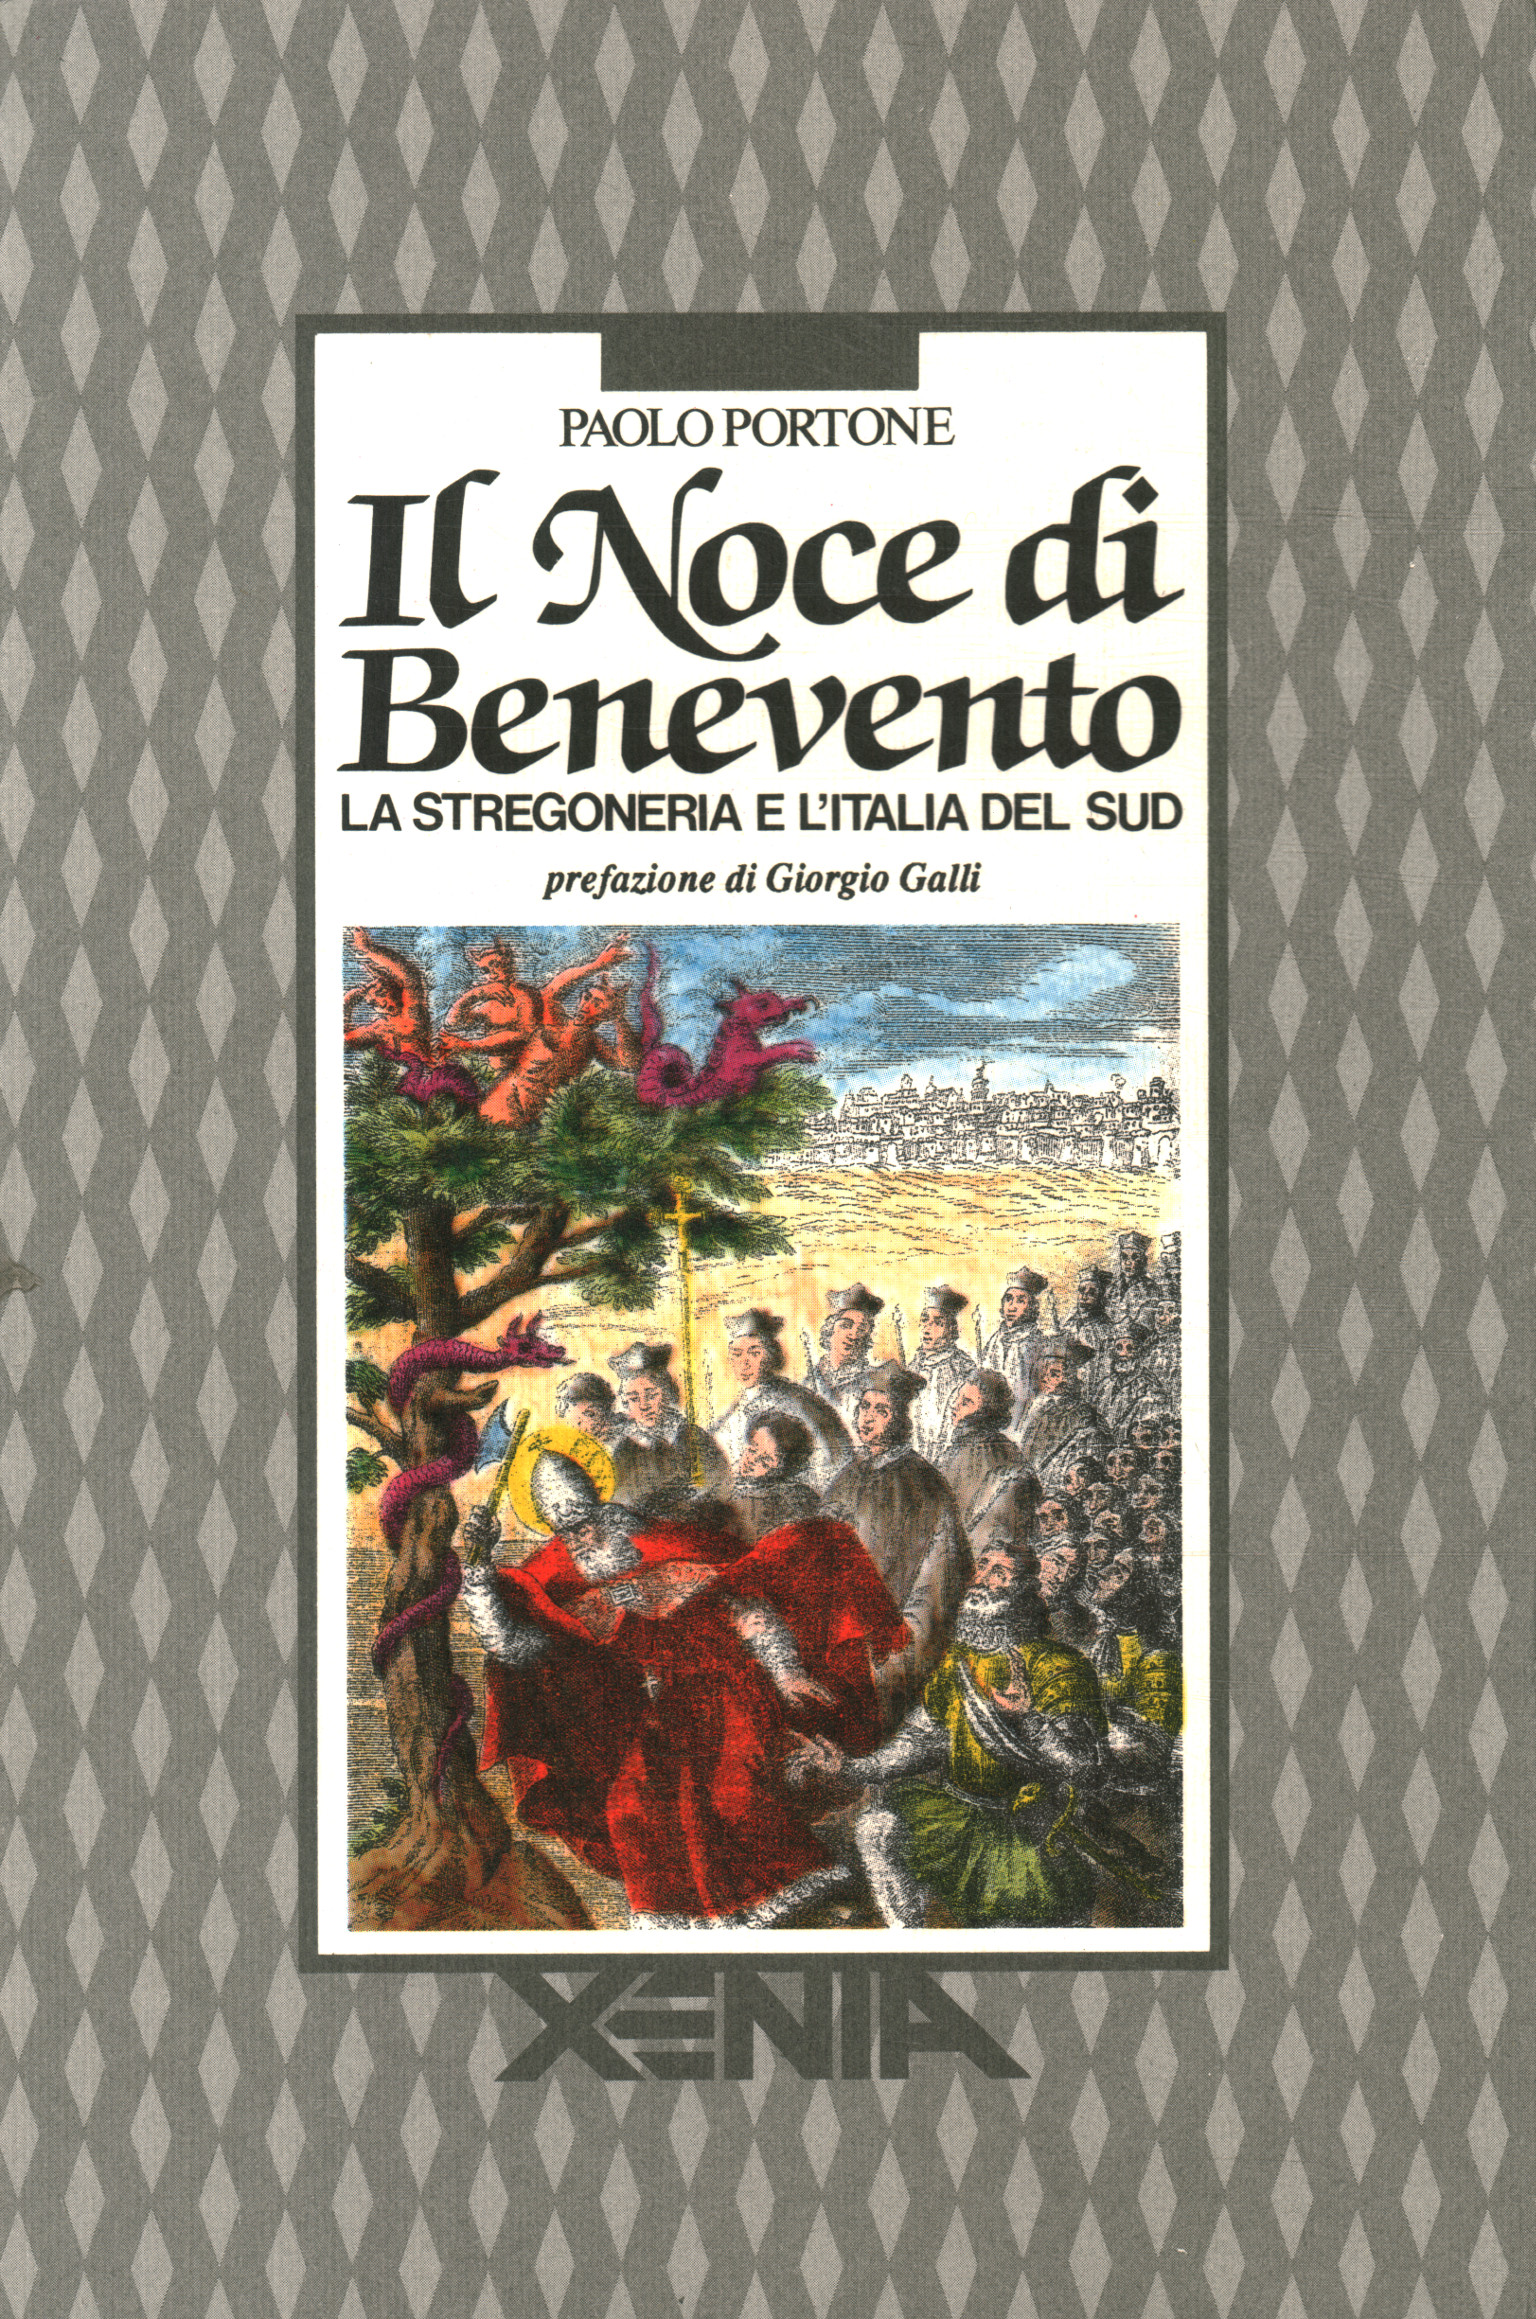 The Walnut of Benevento